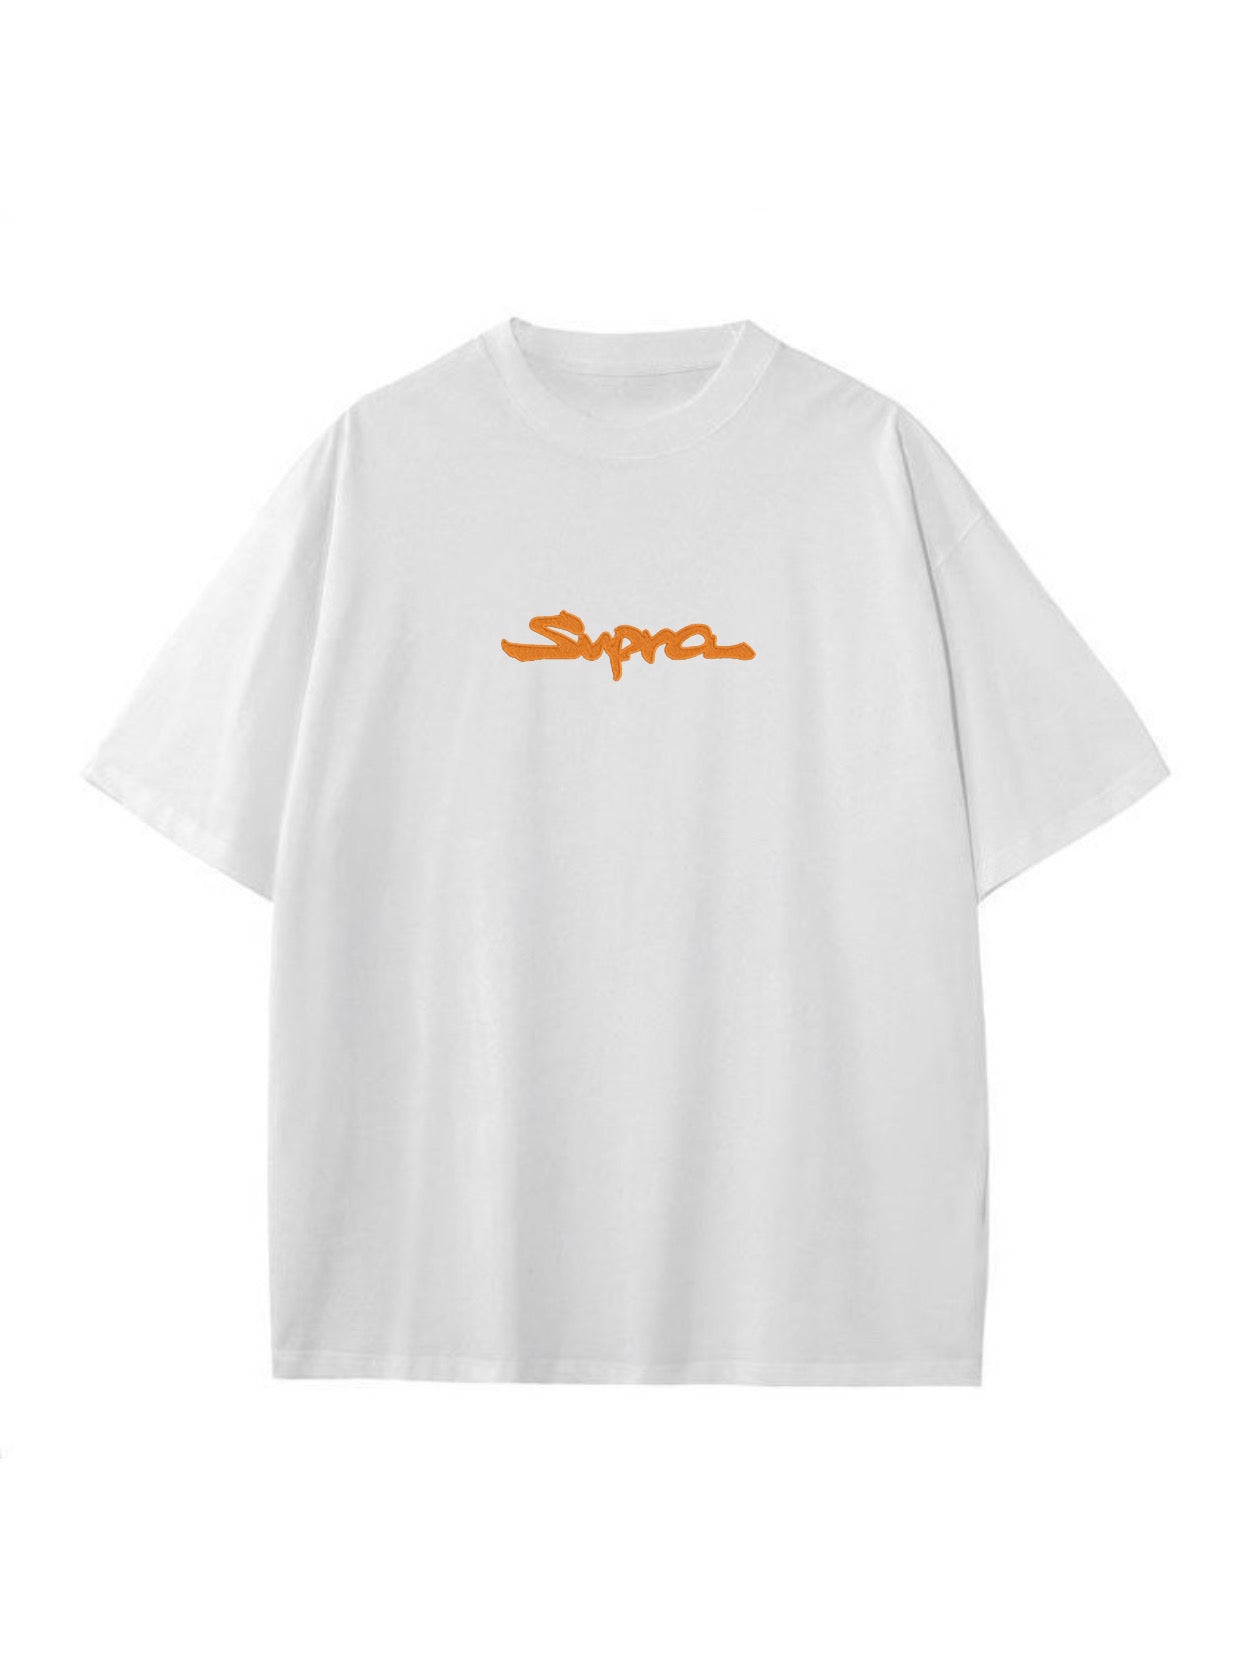 The Supra T-shirt